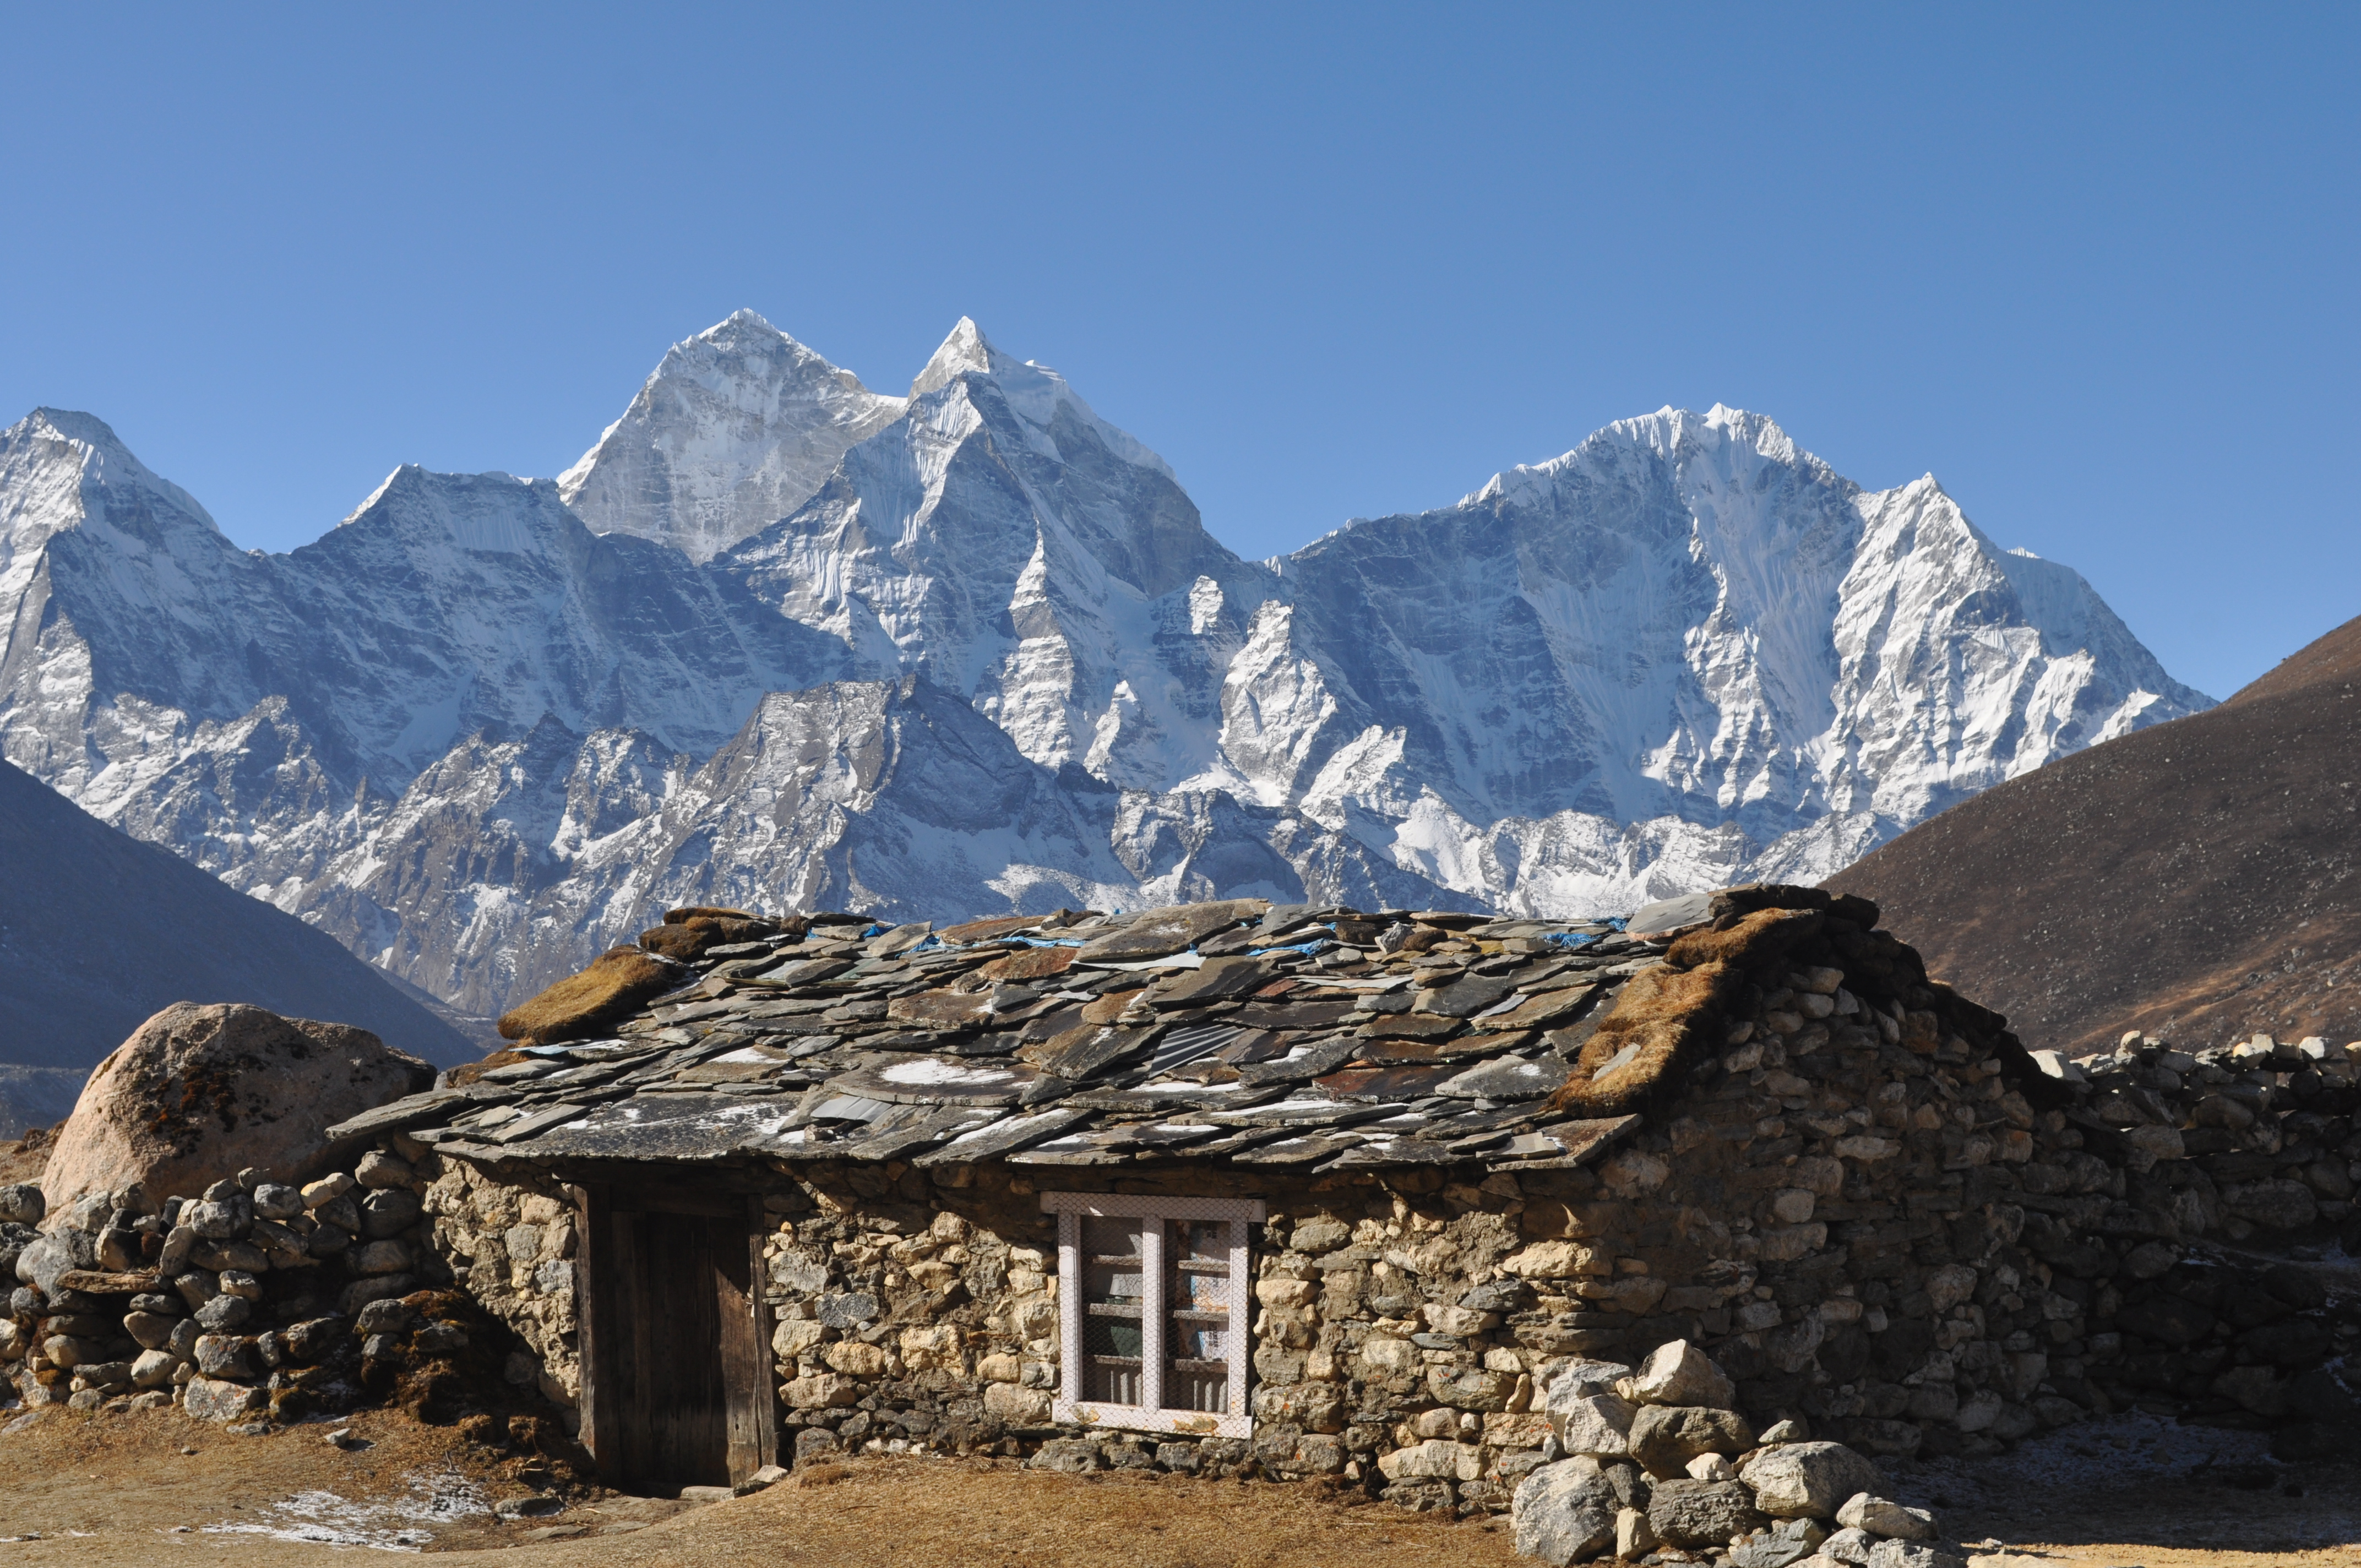 Everest base camp trek in November